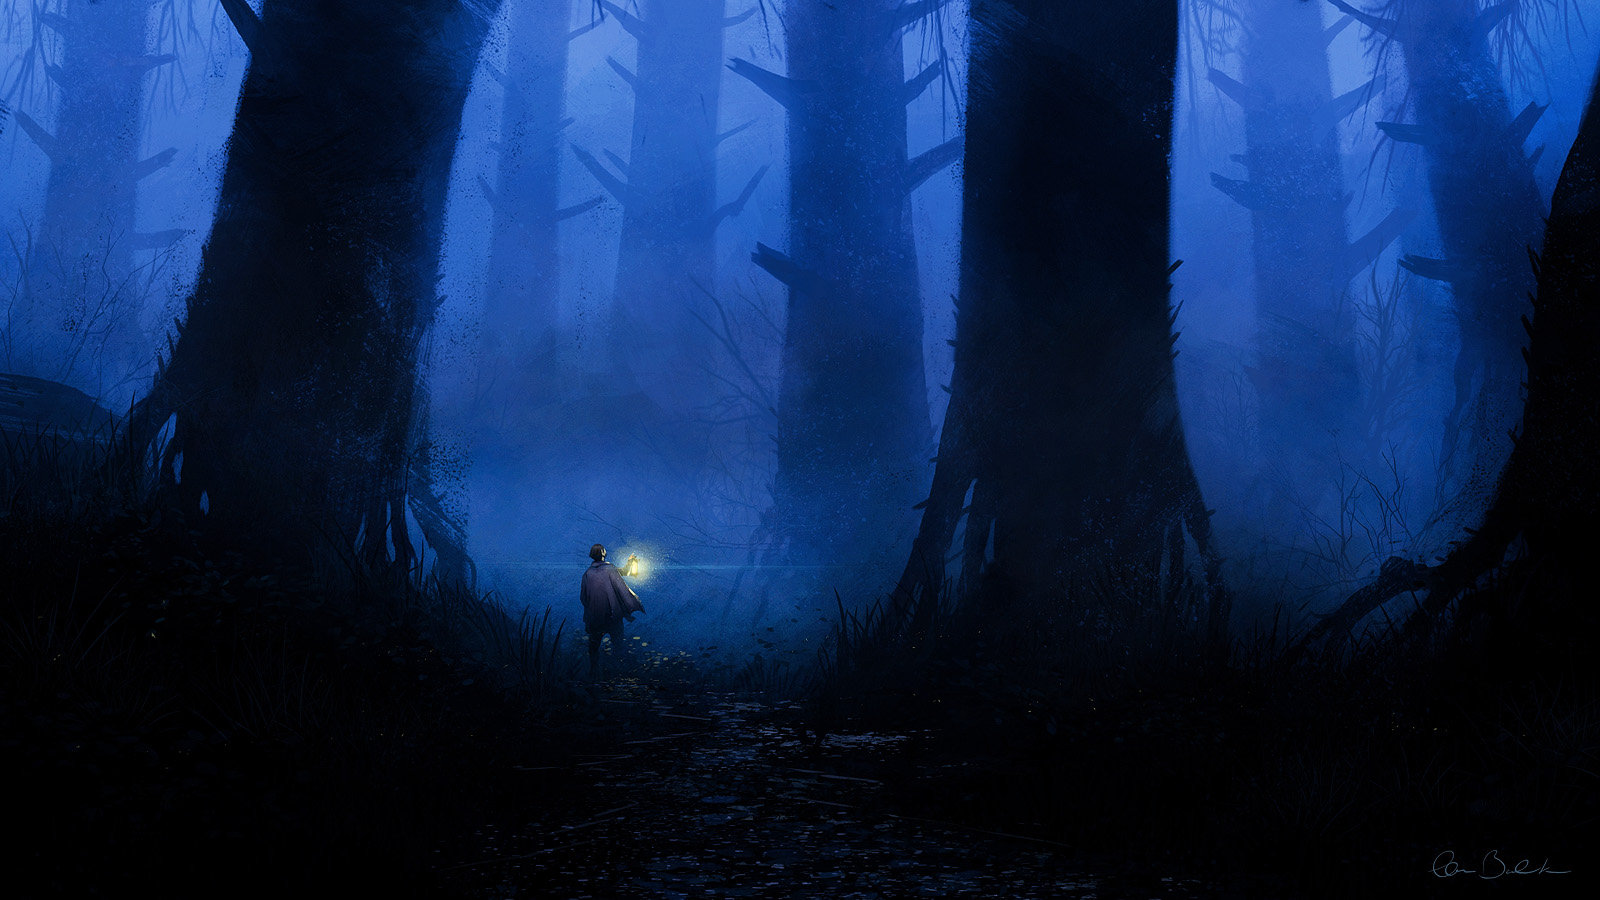 General 1600x900 Christopher Balaskas digital art fantasy art spooky dark trees forest nature blue deep forest